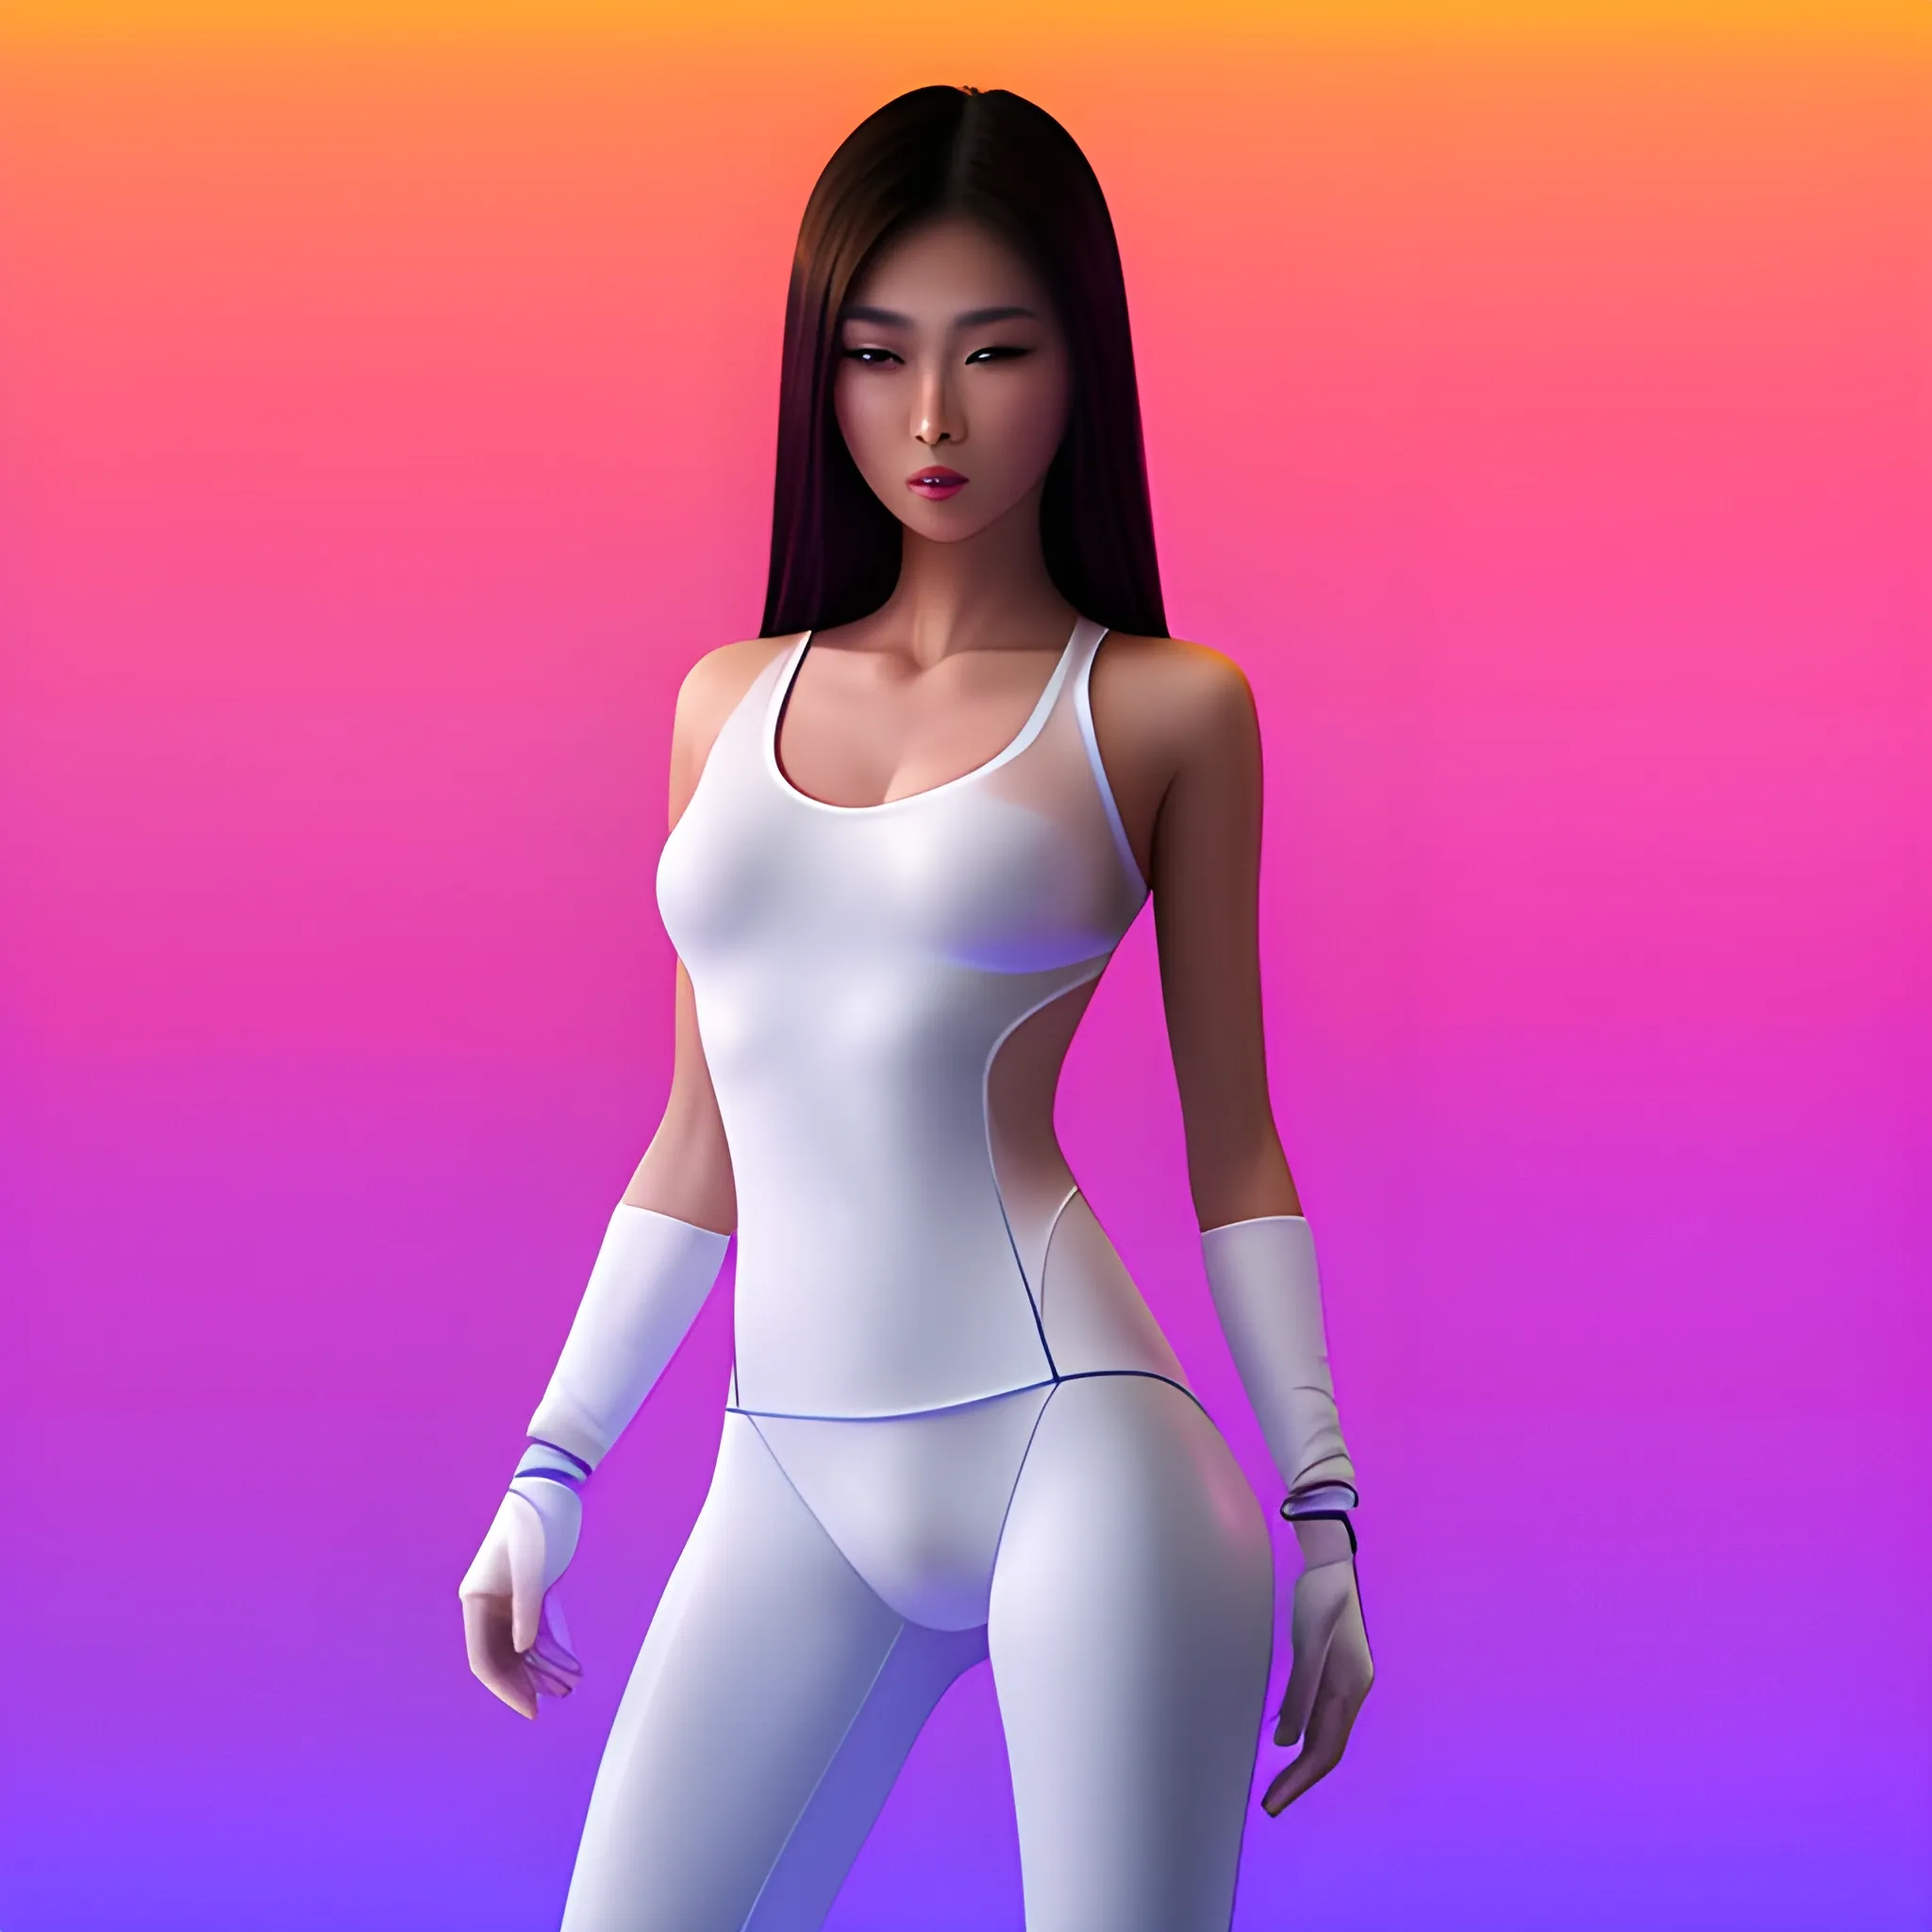 tall asian female model in white spandex, realistic, 8k, neon ba